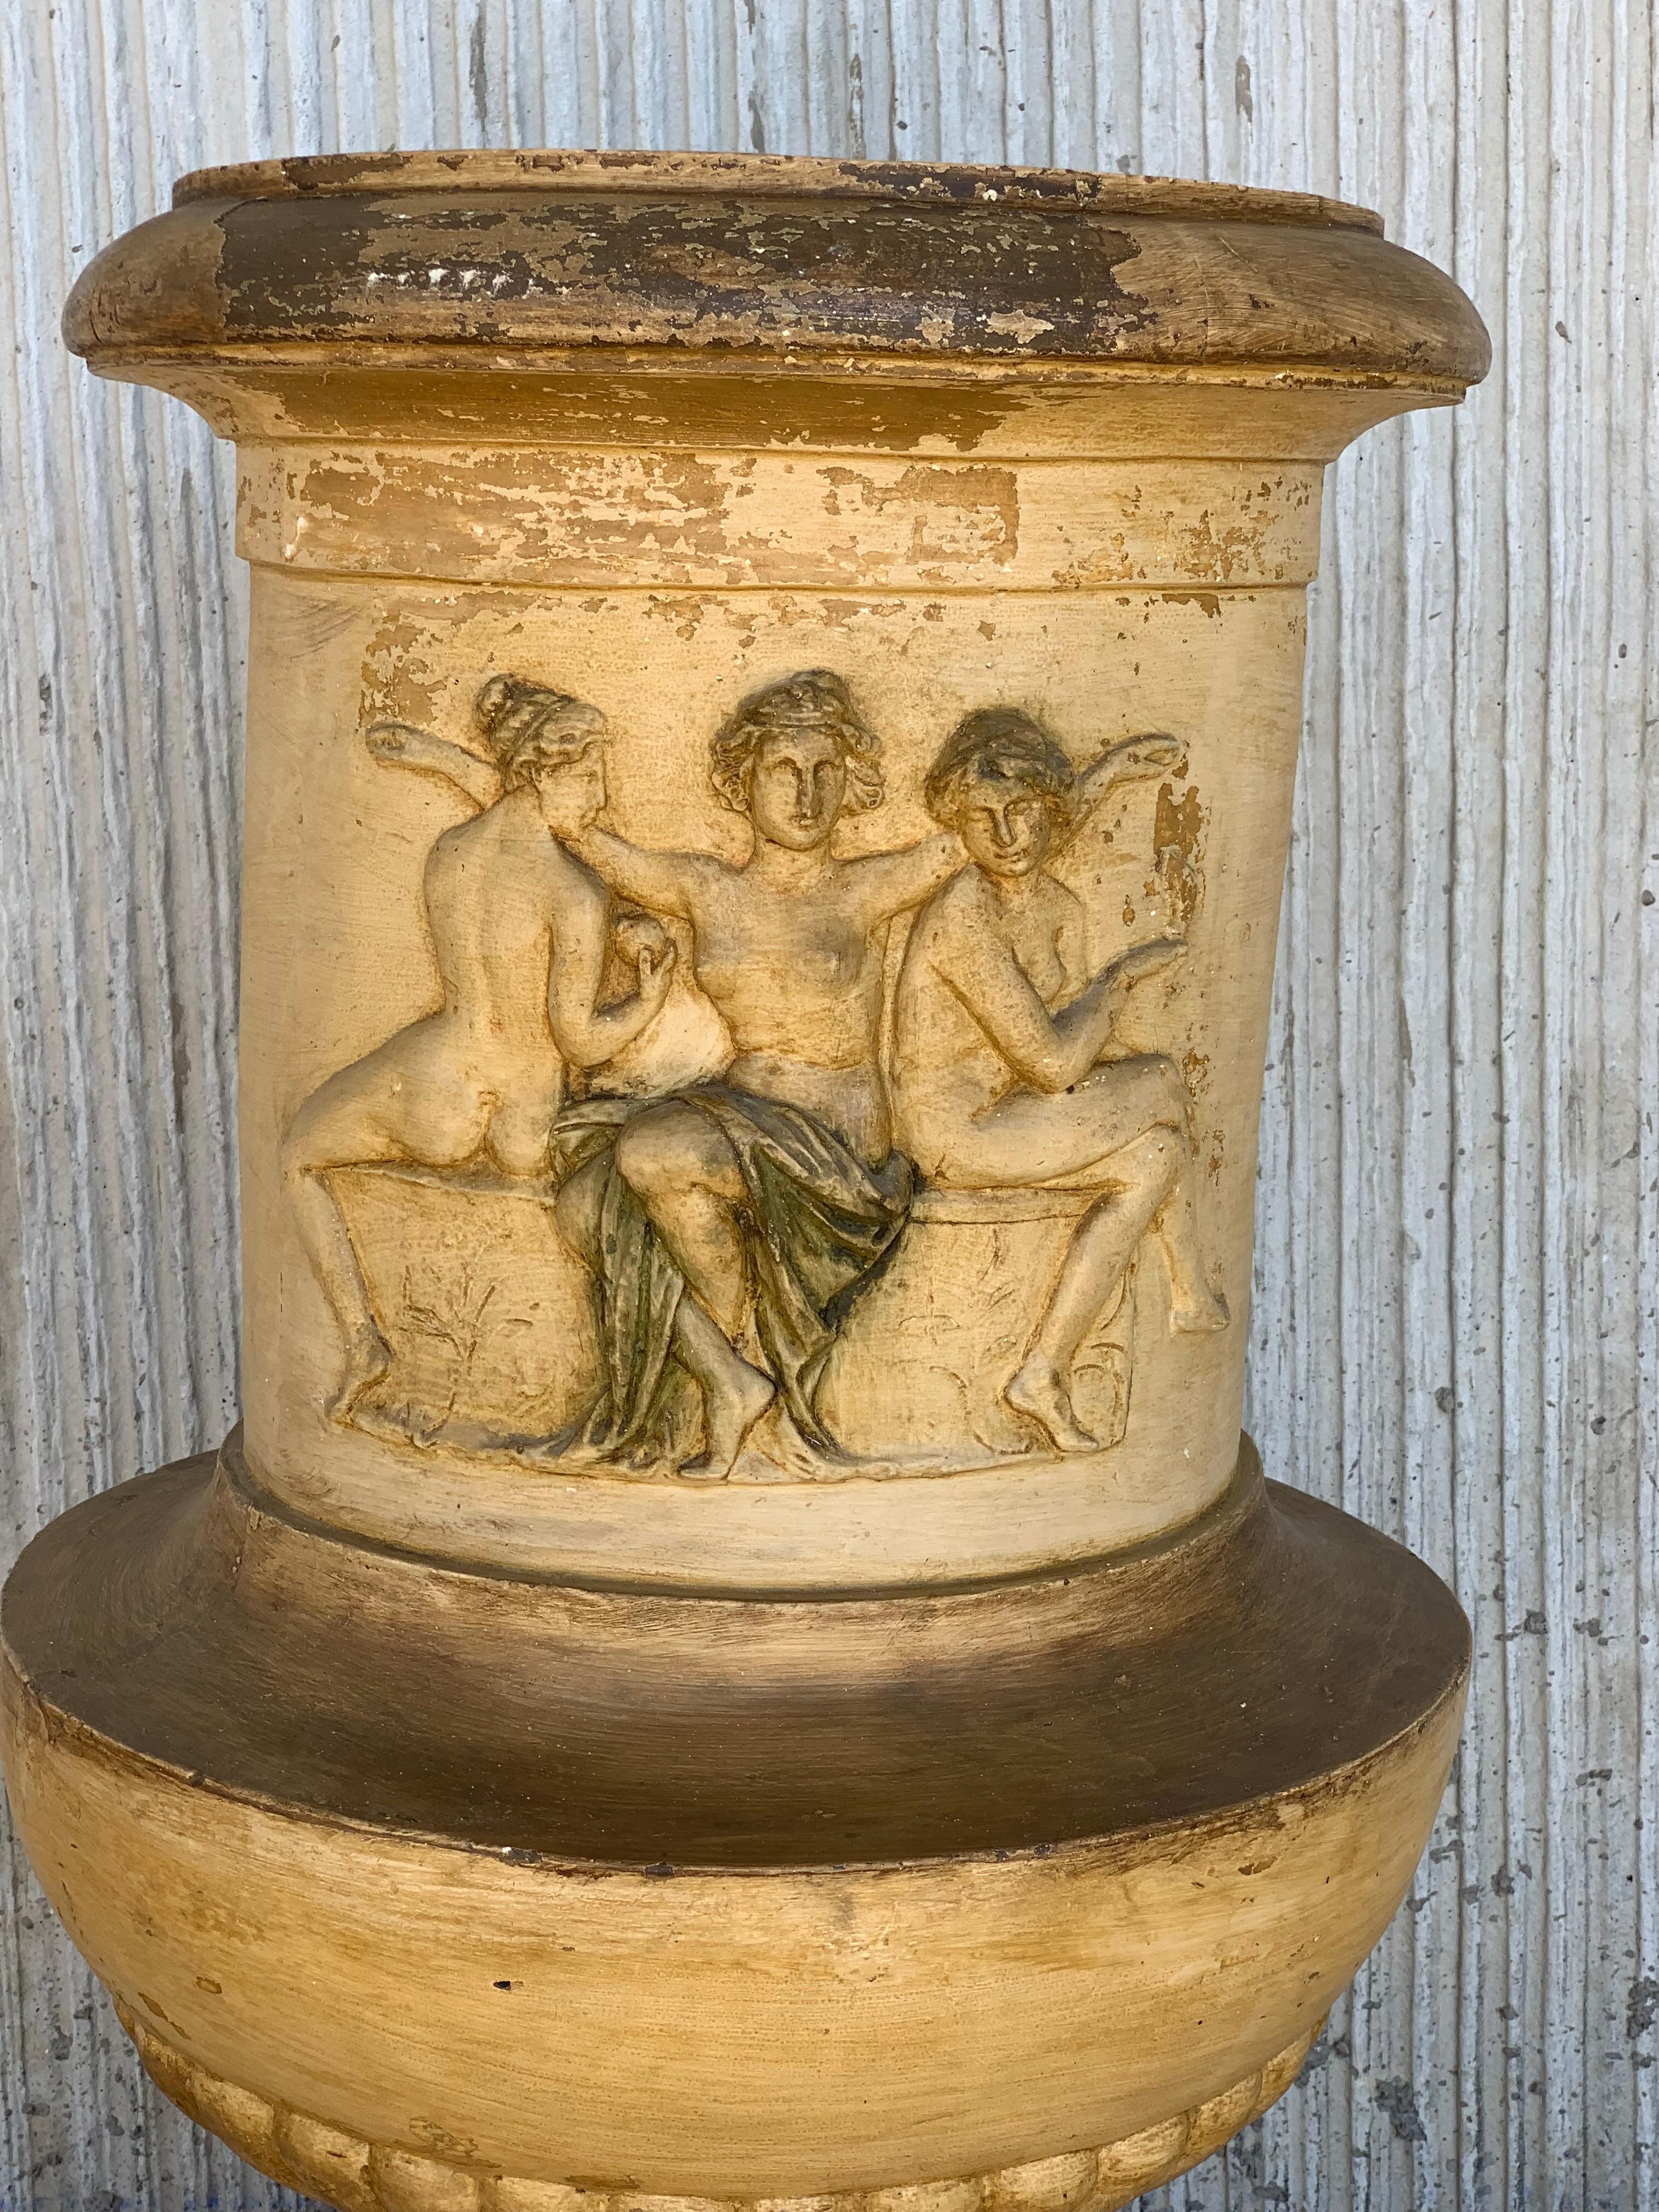 Massive Neoclassical Terracotta Garden Urn Campana-Form Depicting Goddesses In Good Condition For Sale In Miami, FL